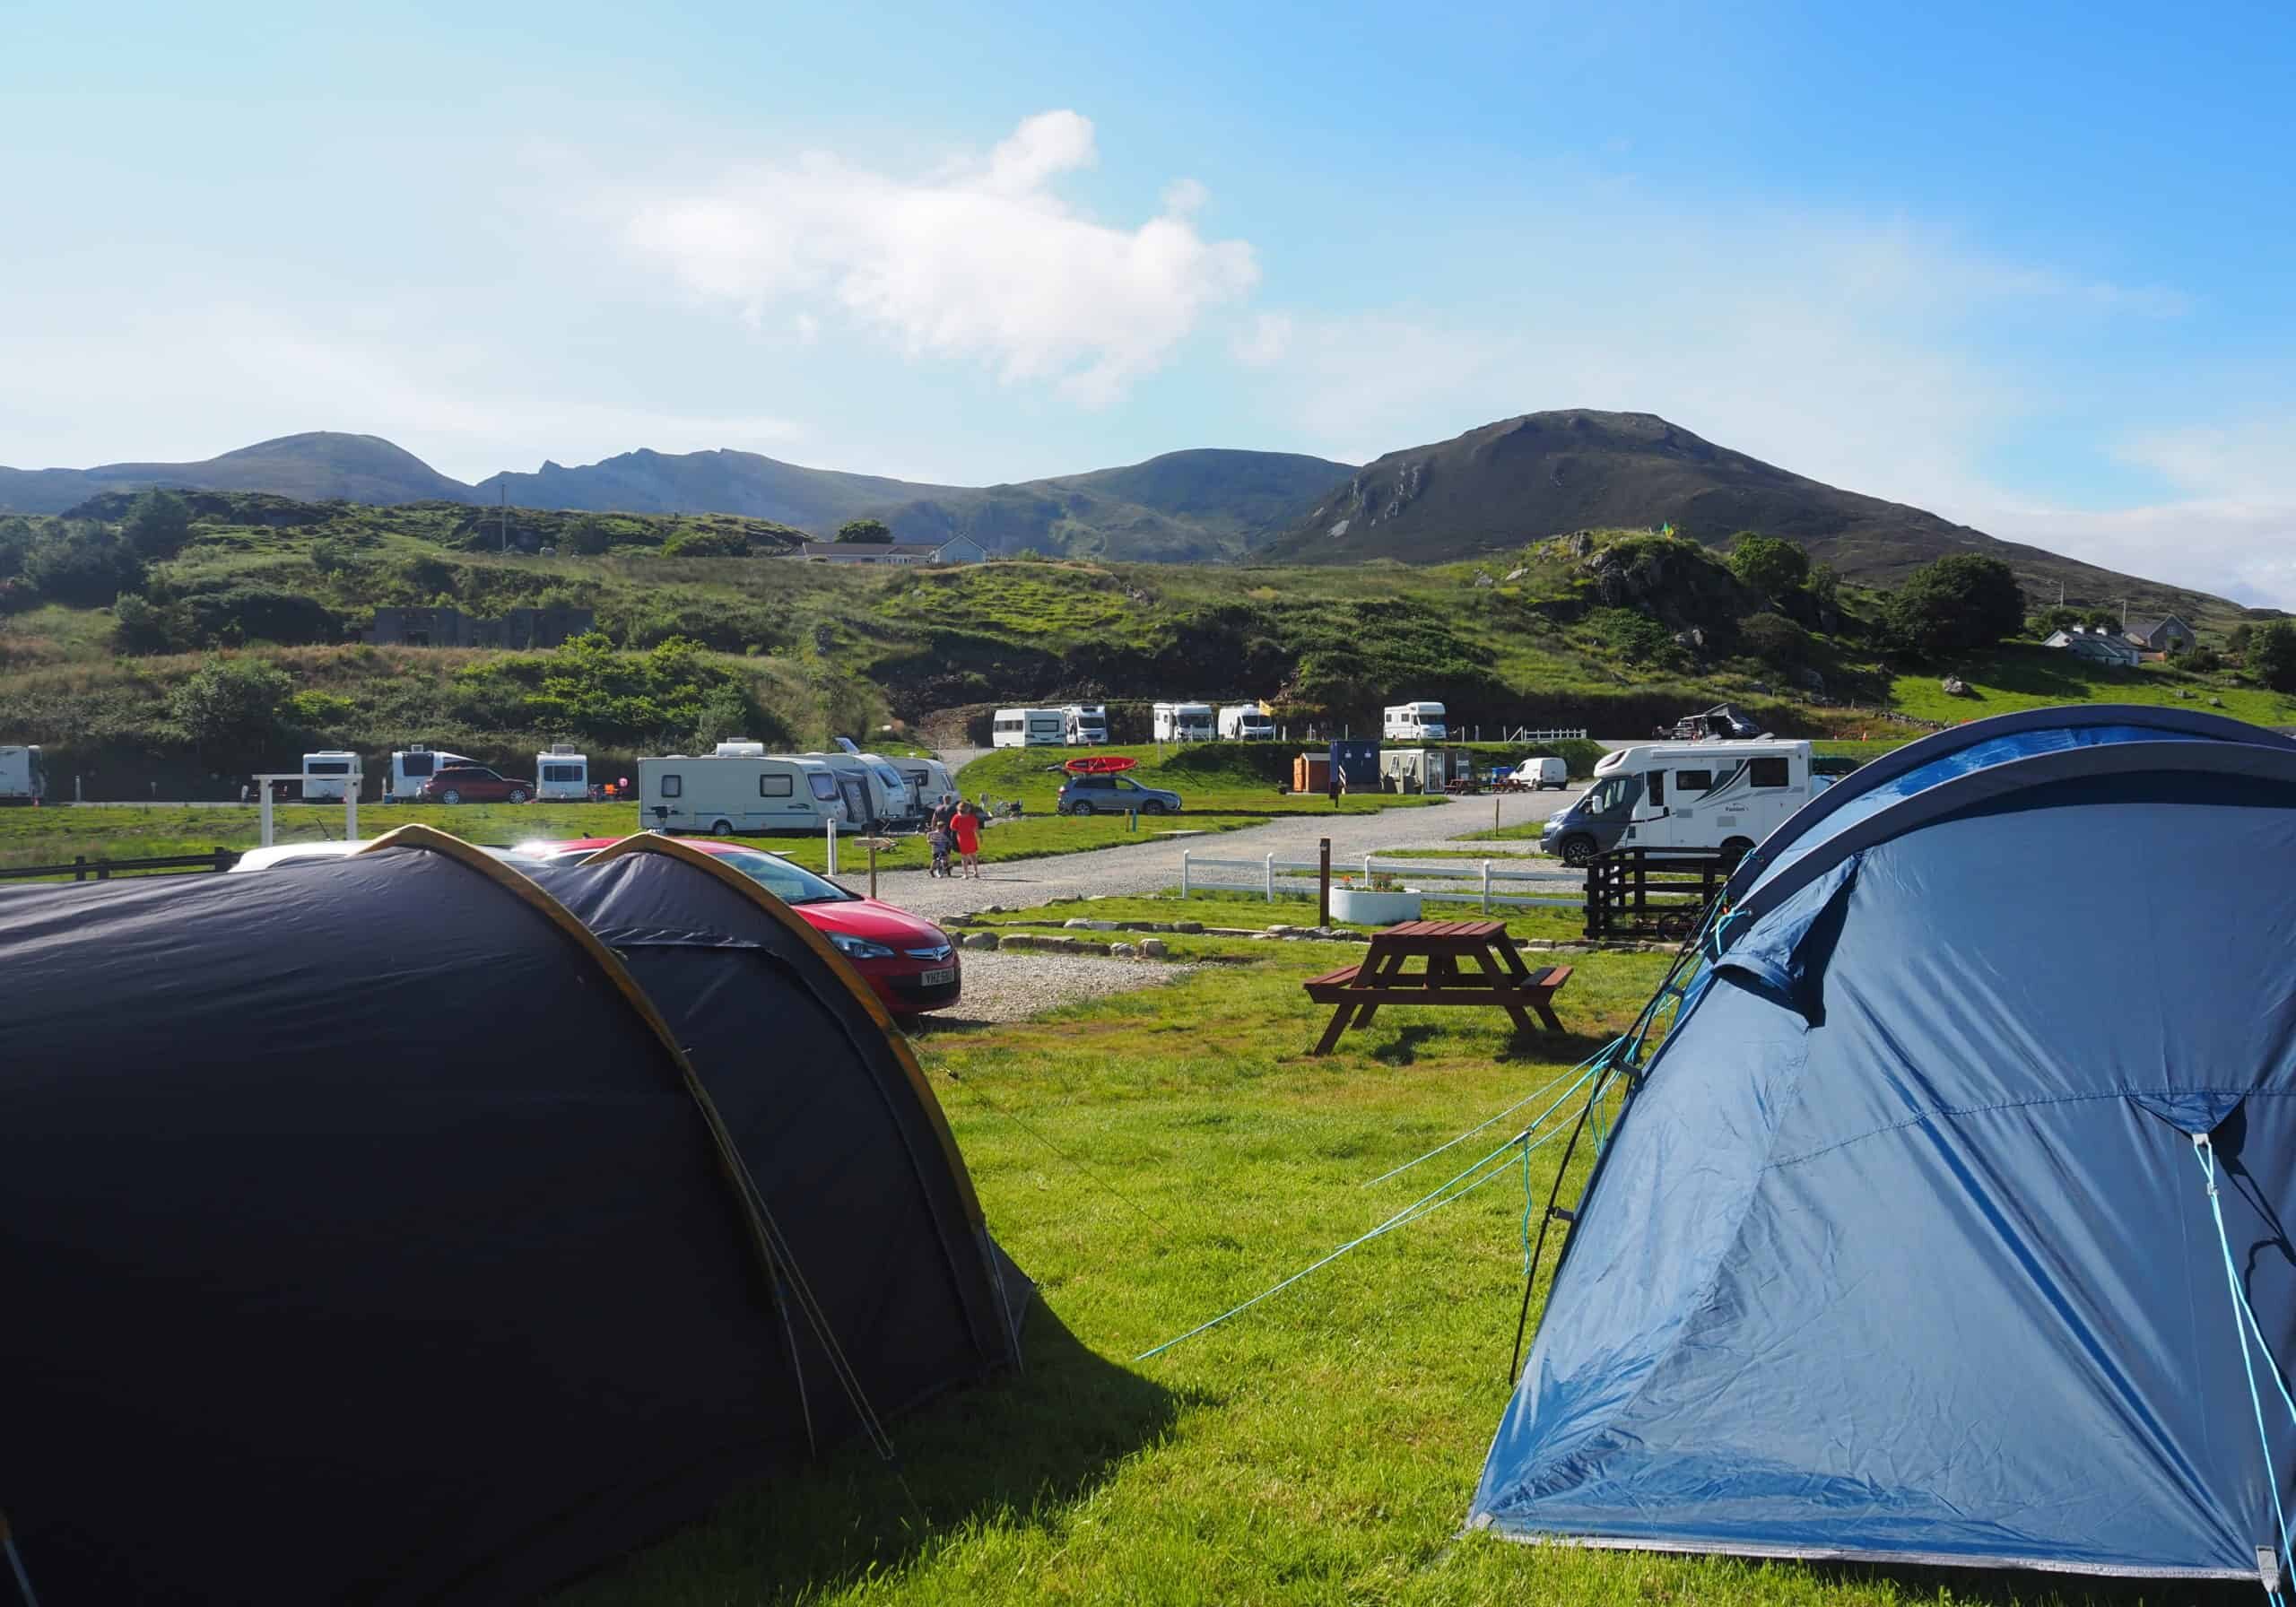 Sliabh Liag Camping